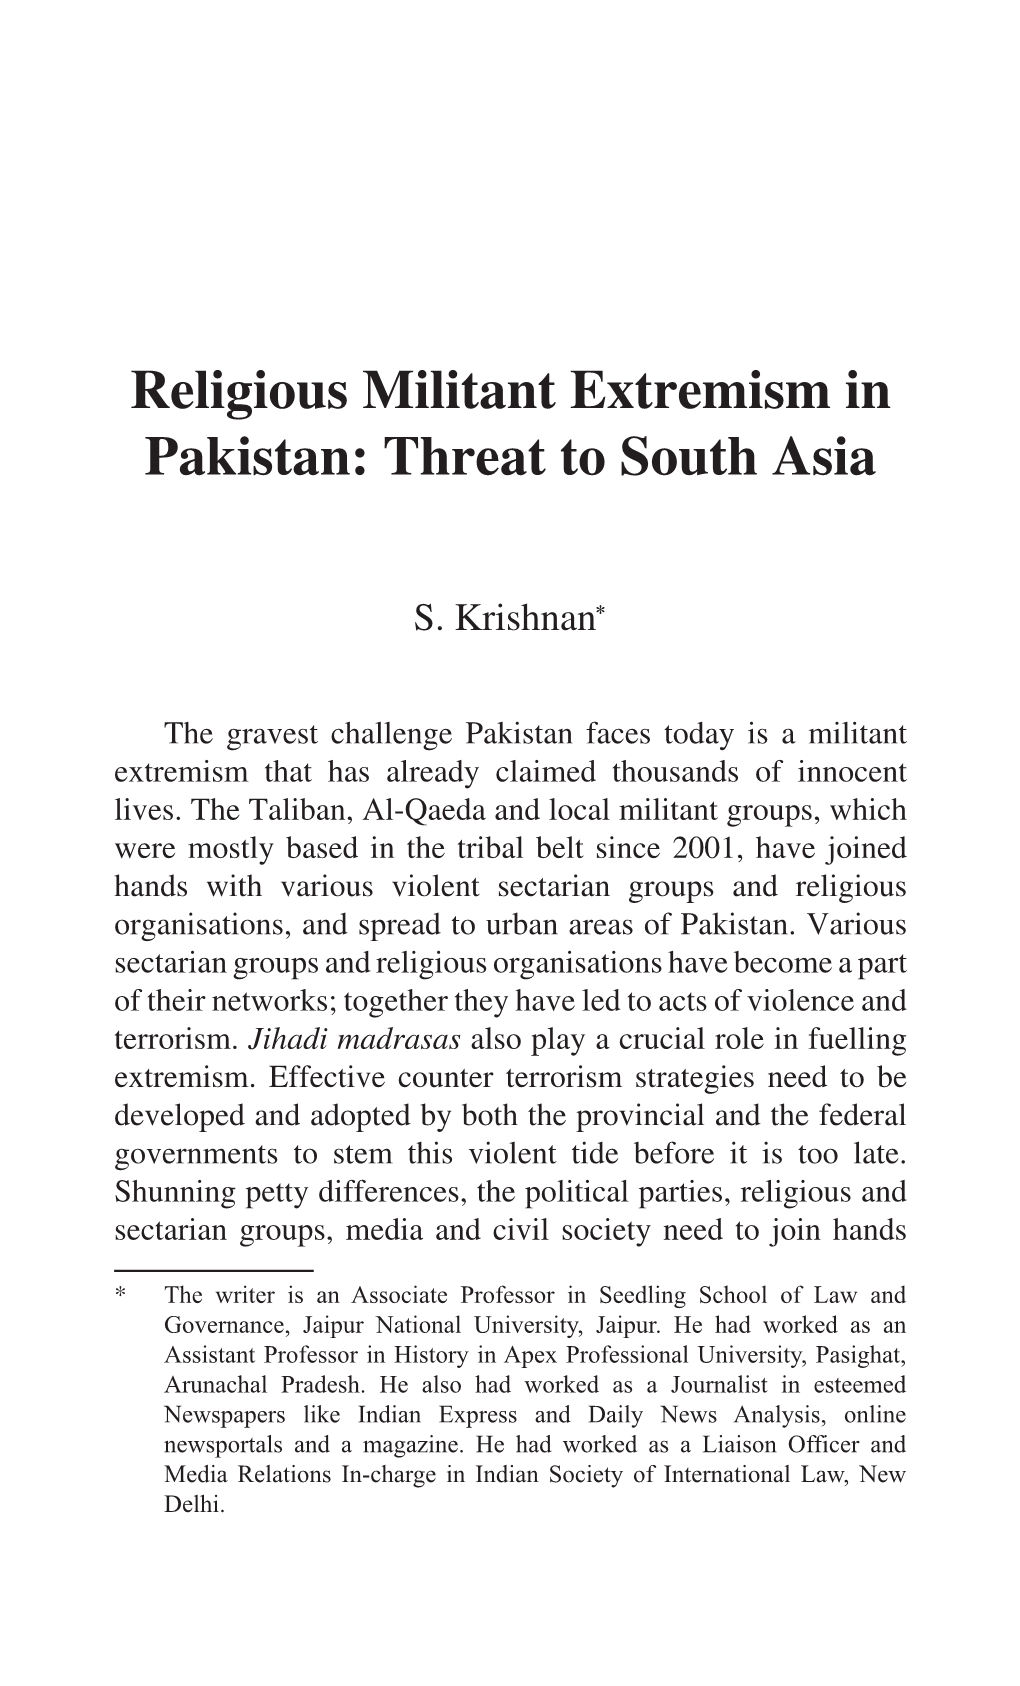 Religious Militant Extremism in Pakistan: Threat to South Asia